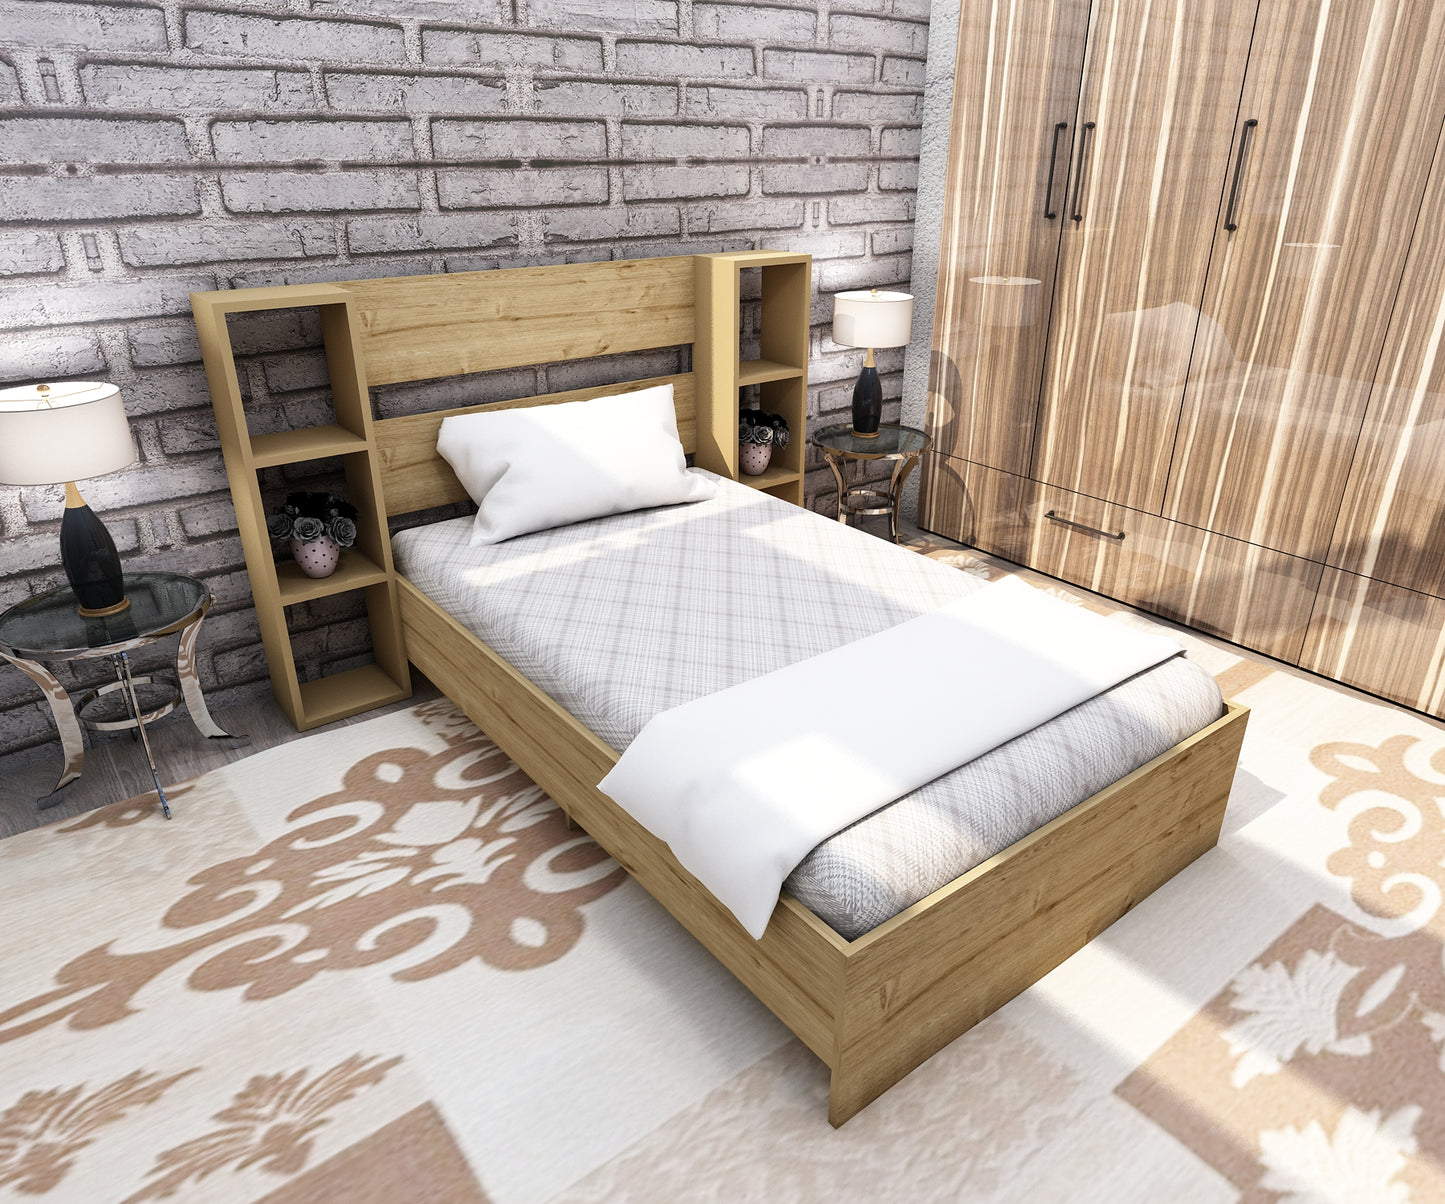 Erica Bedstead Bed Frame with Metal Slats and Storage Shelves